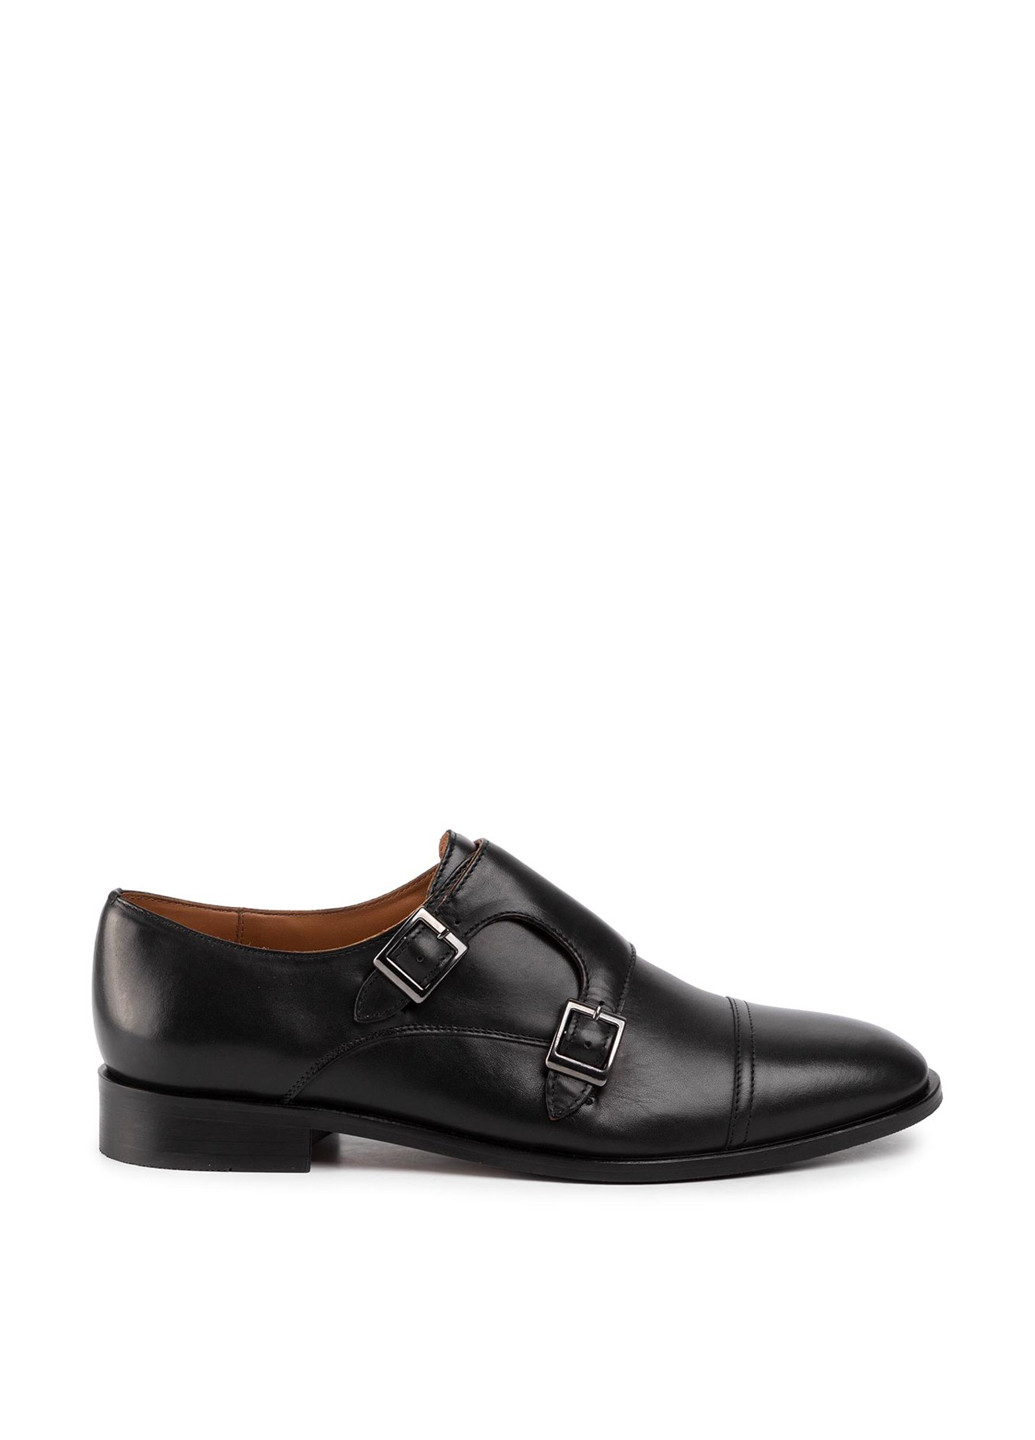 Черные кэжуал туфлі mpu436-rudi-03 Gino Rossi